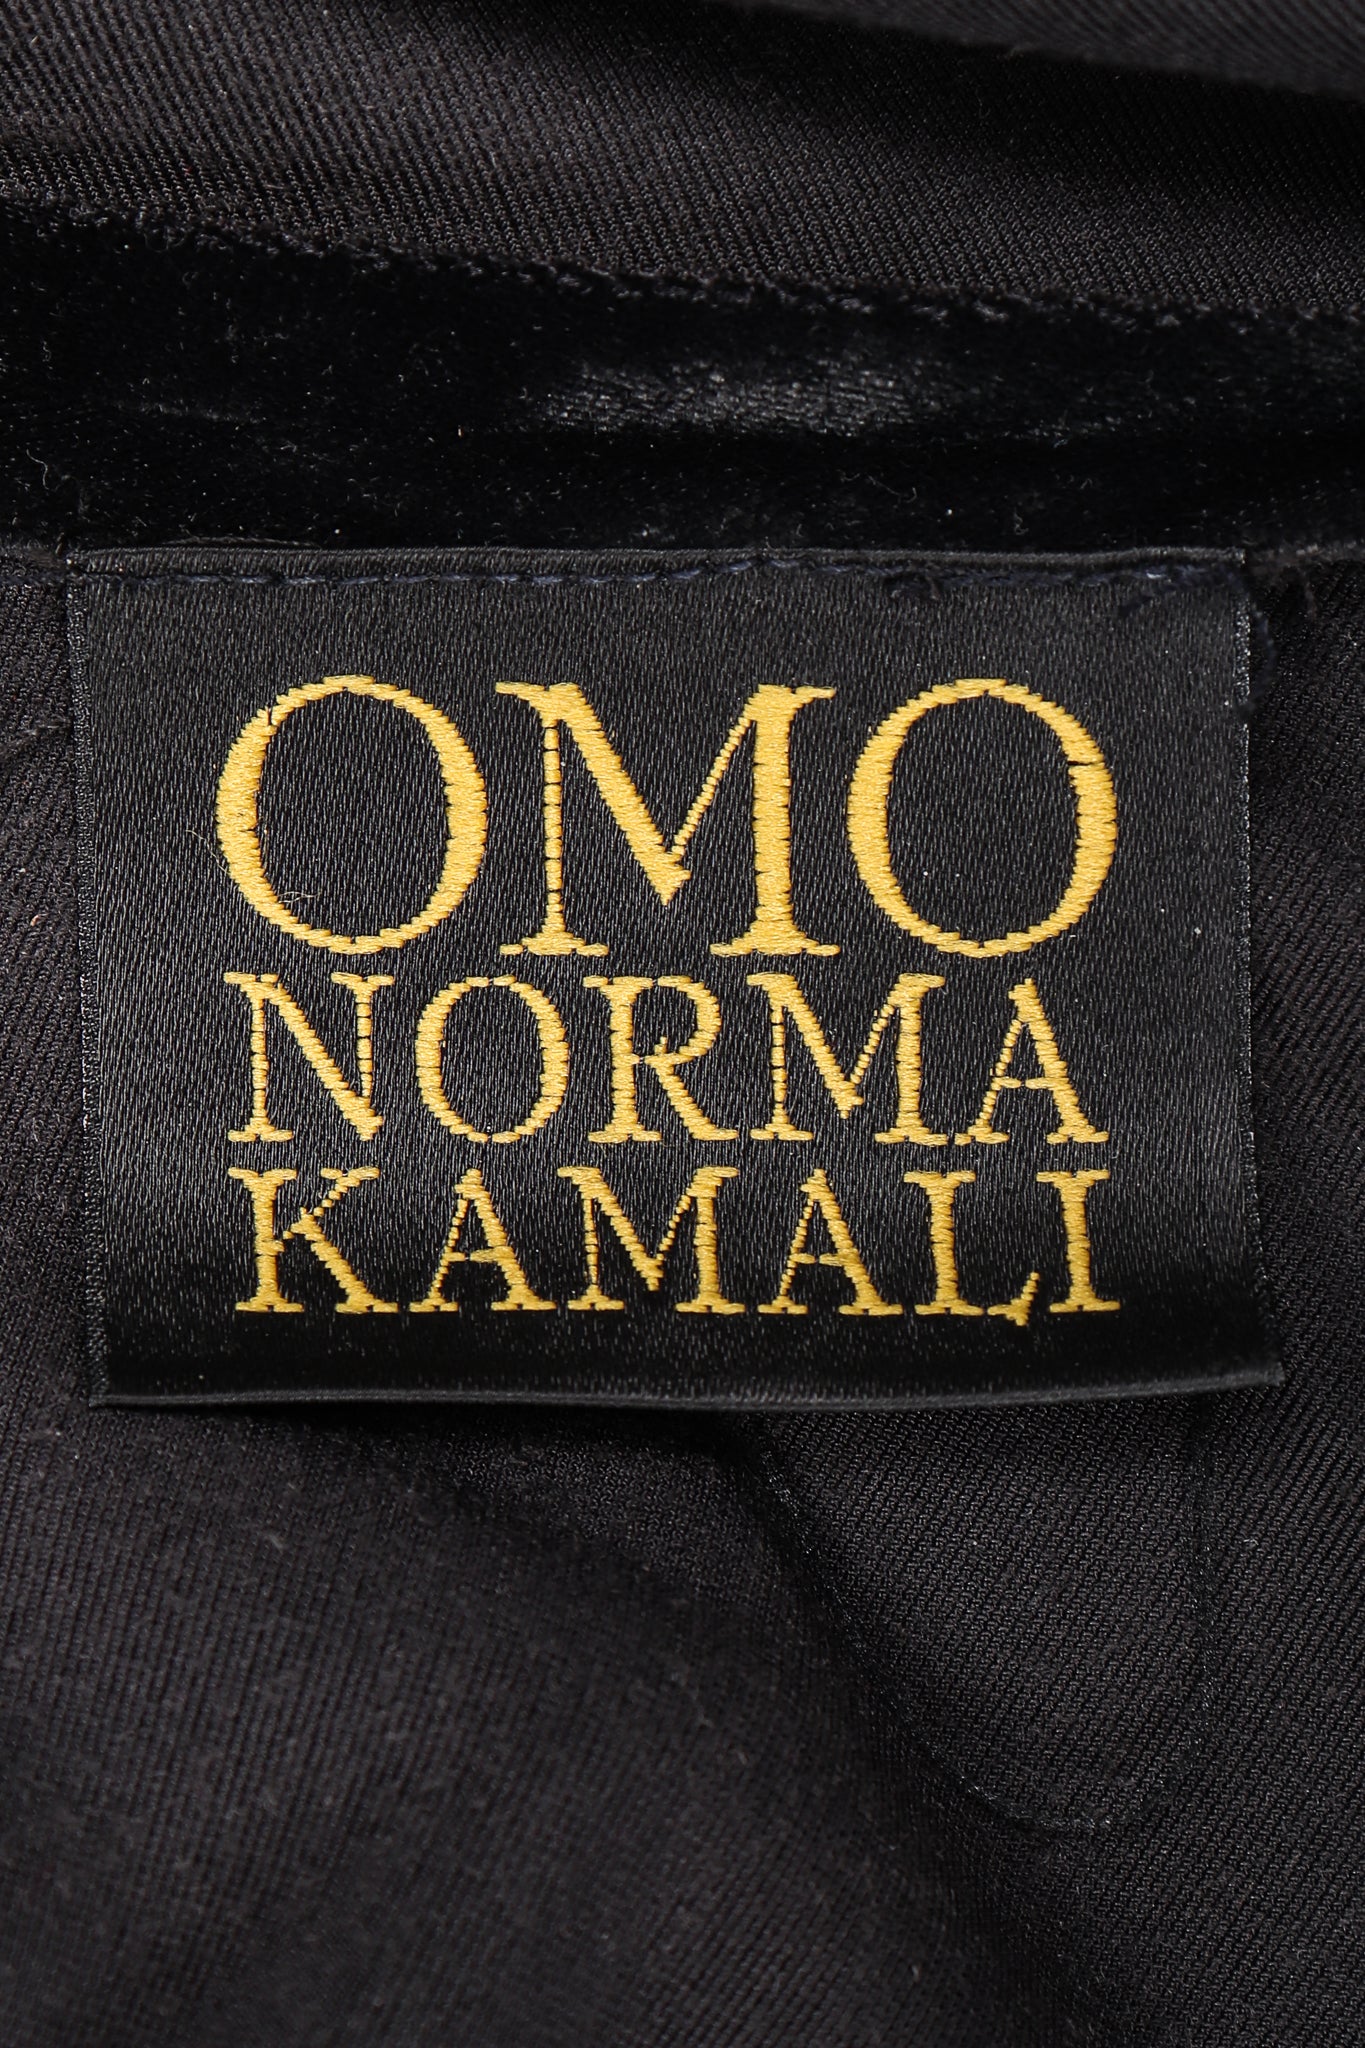 Recess Designer Consignment Vintage OMO Norma Kamali Stretch Velvet Circle Skirt Dance Dress Los Angeles Resale